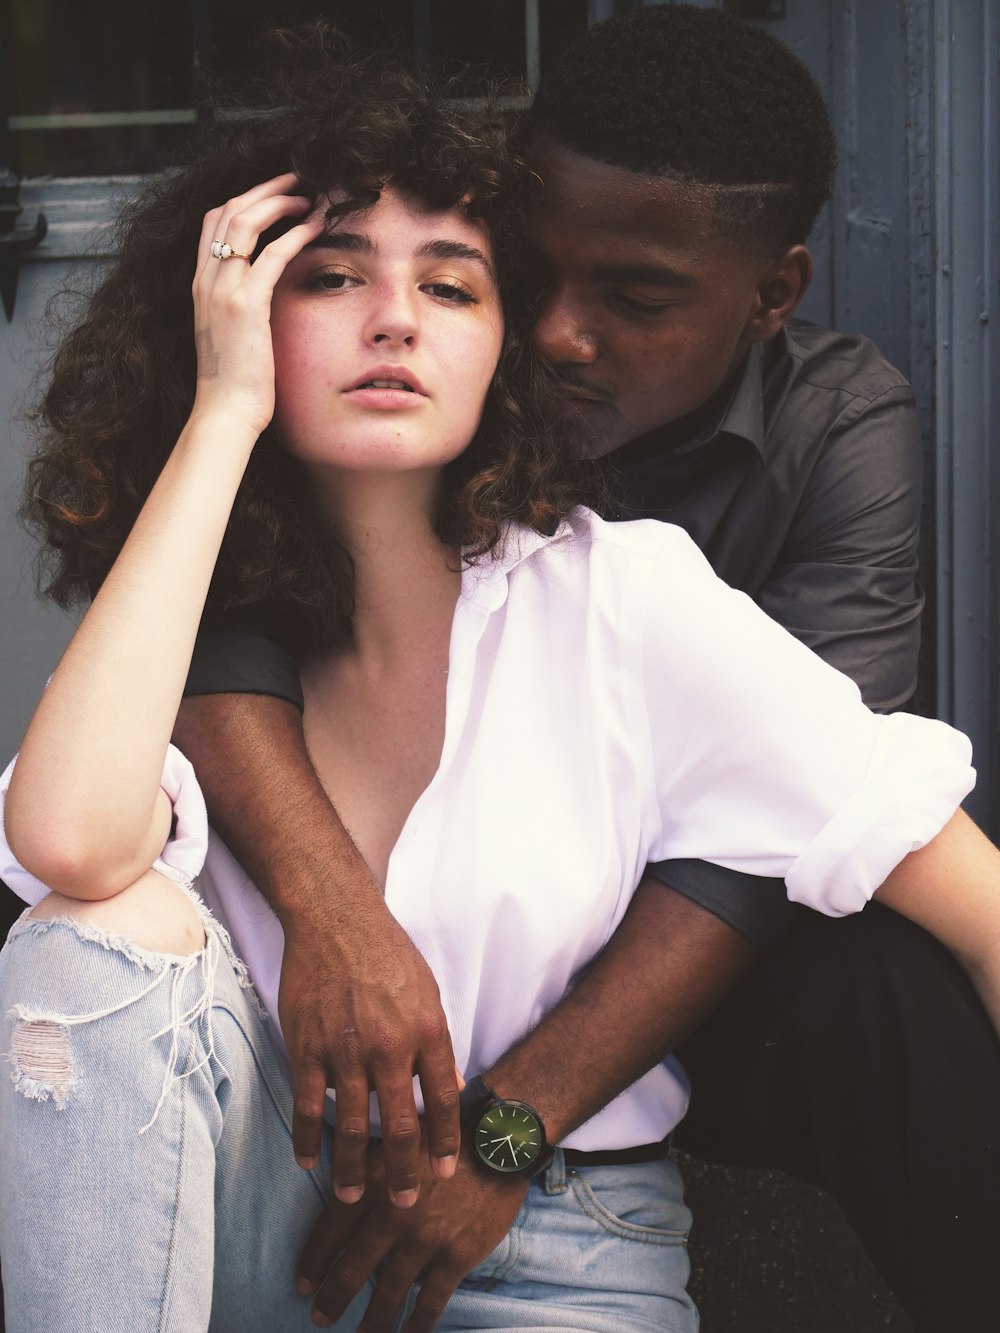 Mann umarmt Frau, während er sich gegenseitig fotografiert